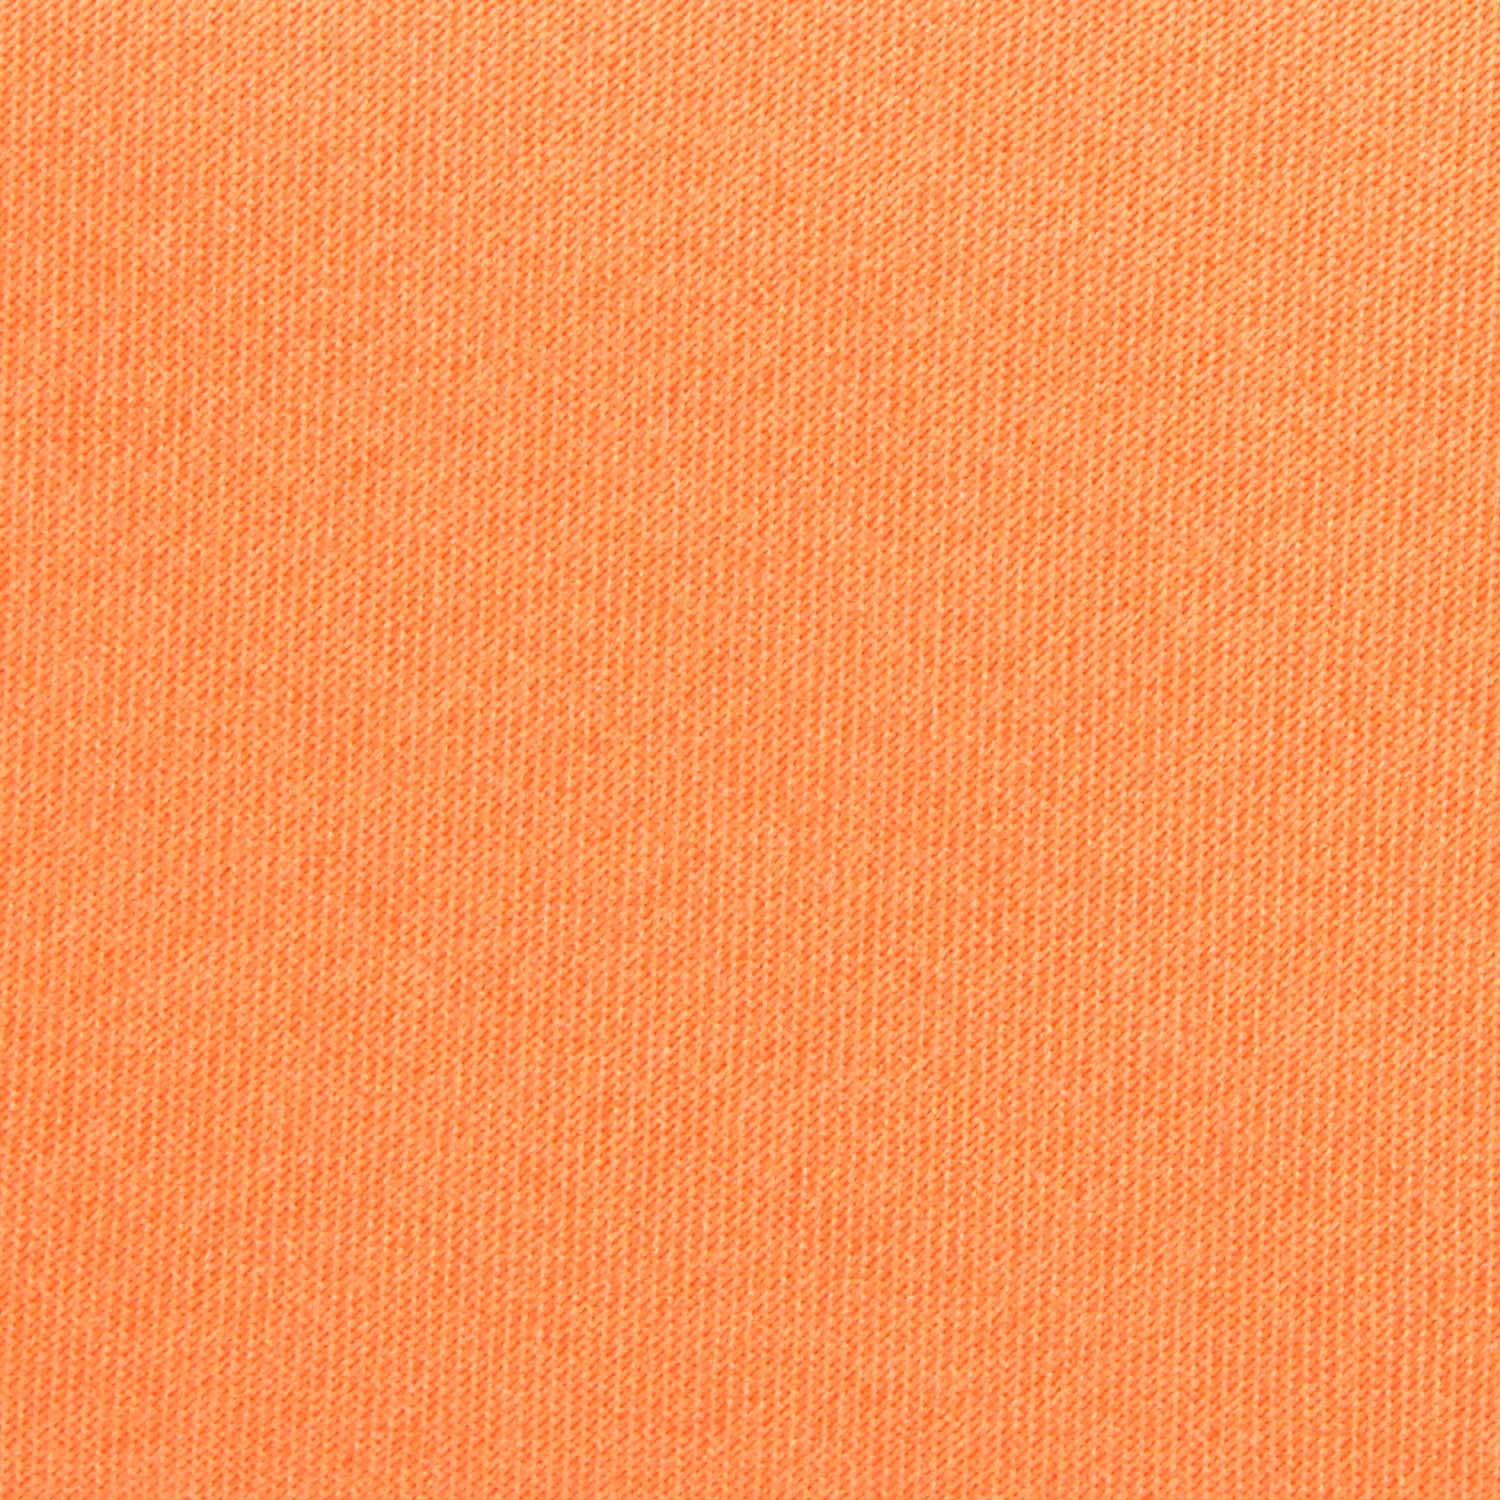 Orange Tangerine Satin Fabric Pocket Square M143